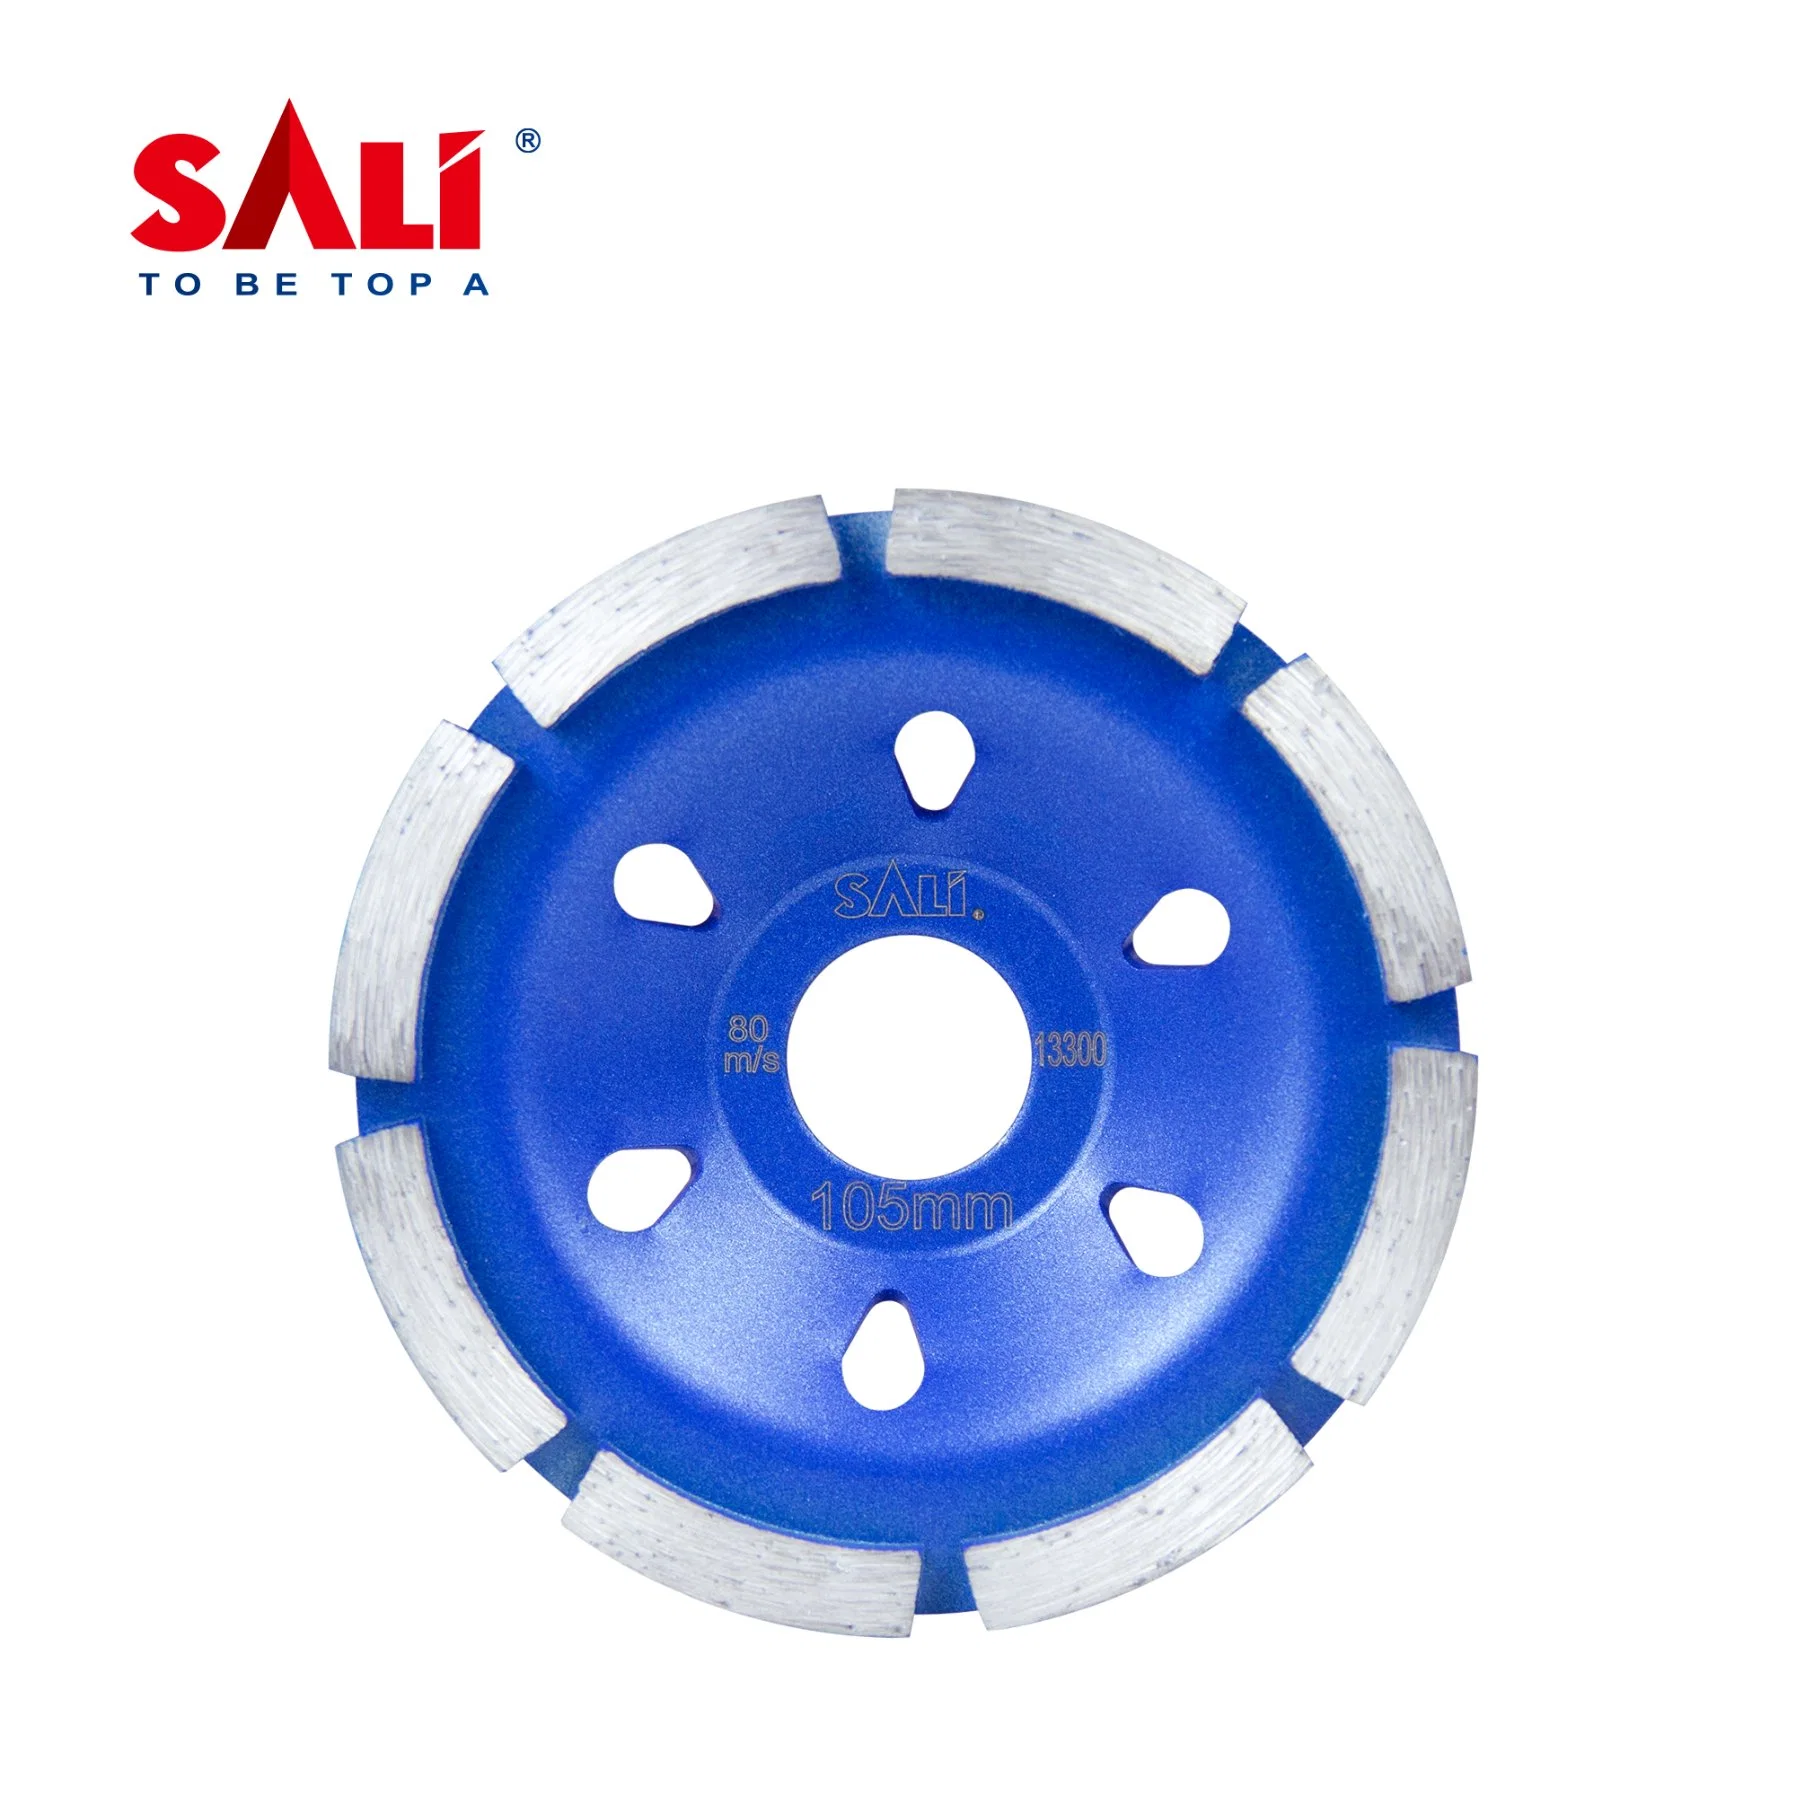 Sali Manufacture Single Row Sintered Diamond Grinding Cup Wheel